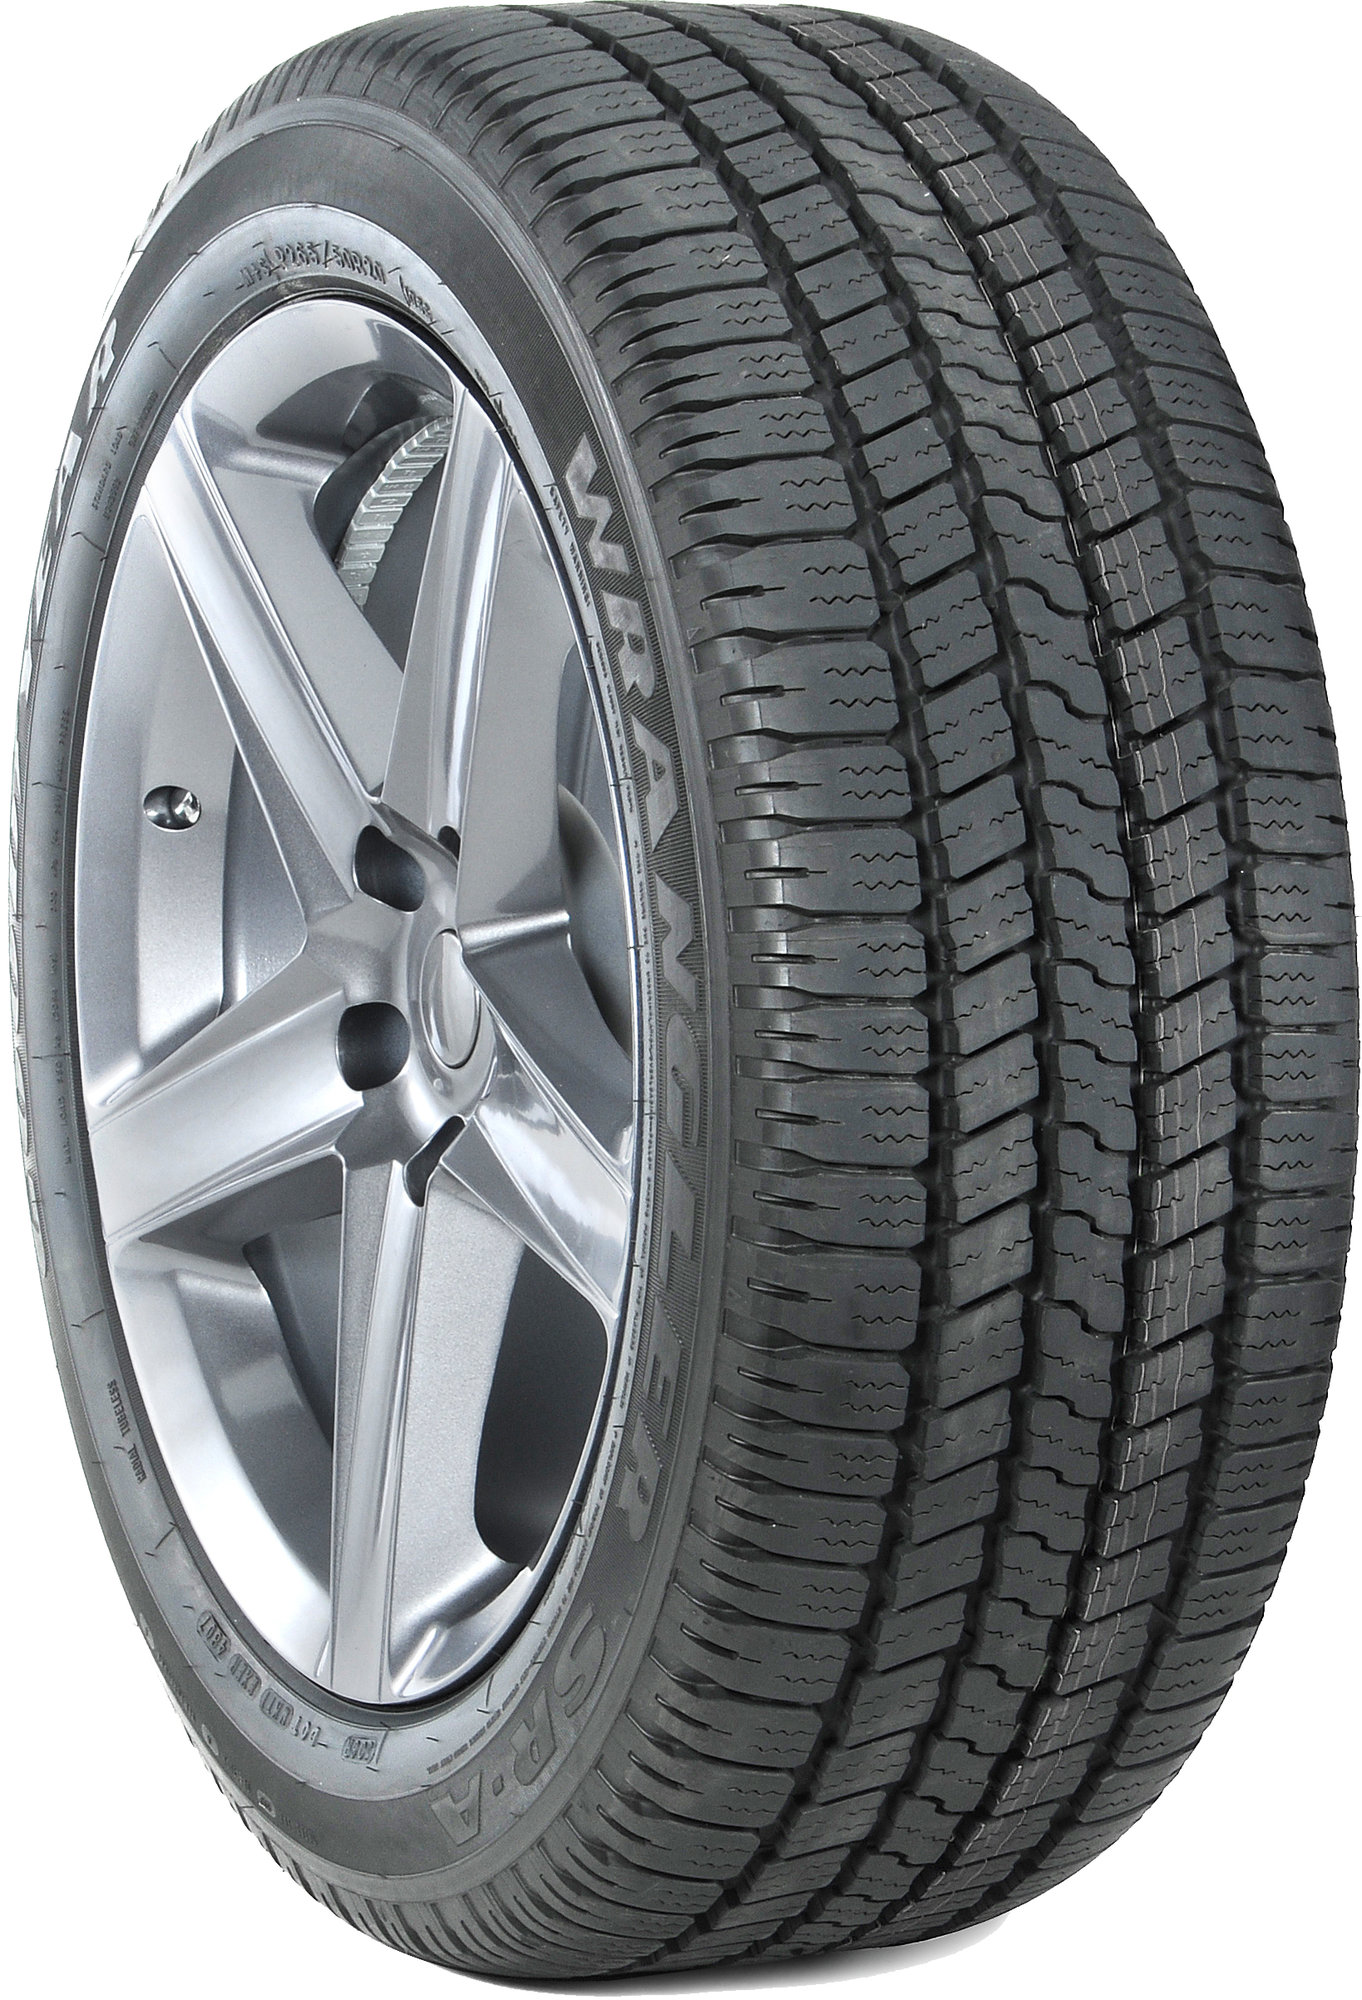 Goodyear Wrangler Sr A P265 65r18 Discount Tire